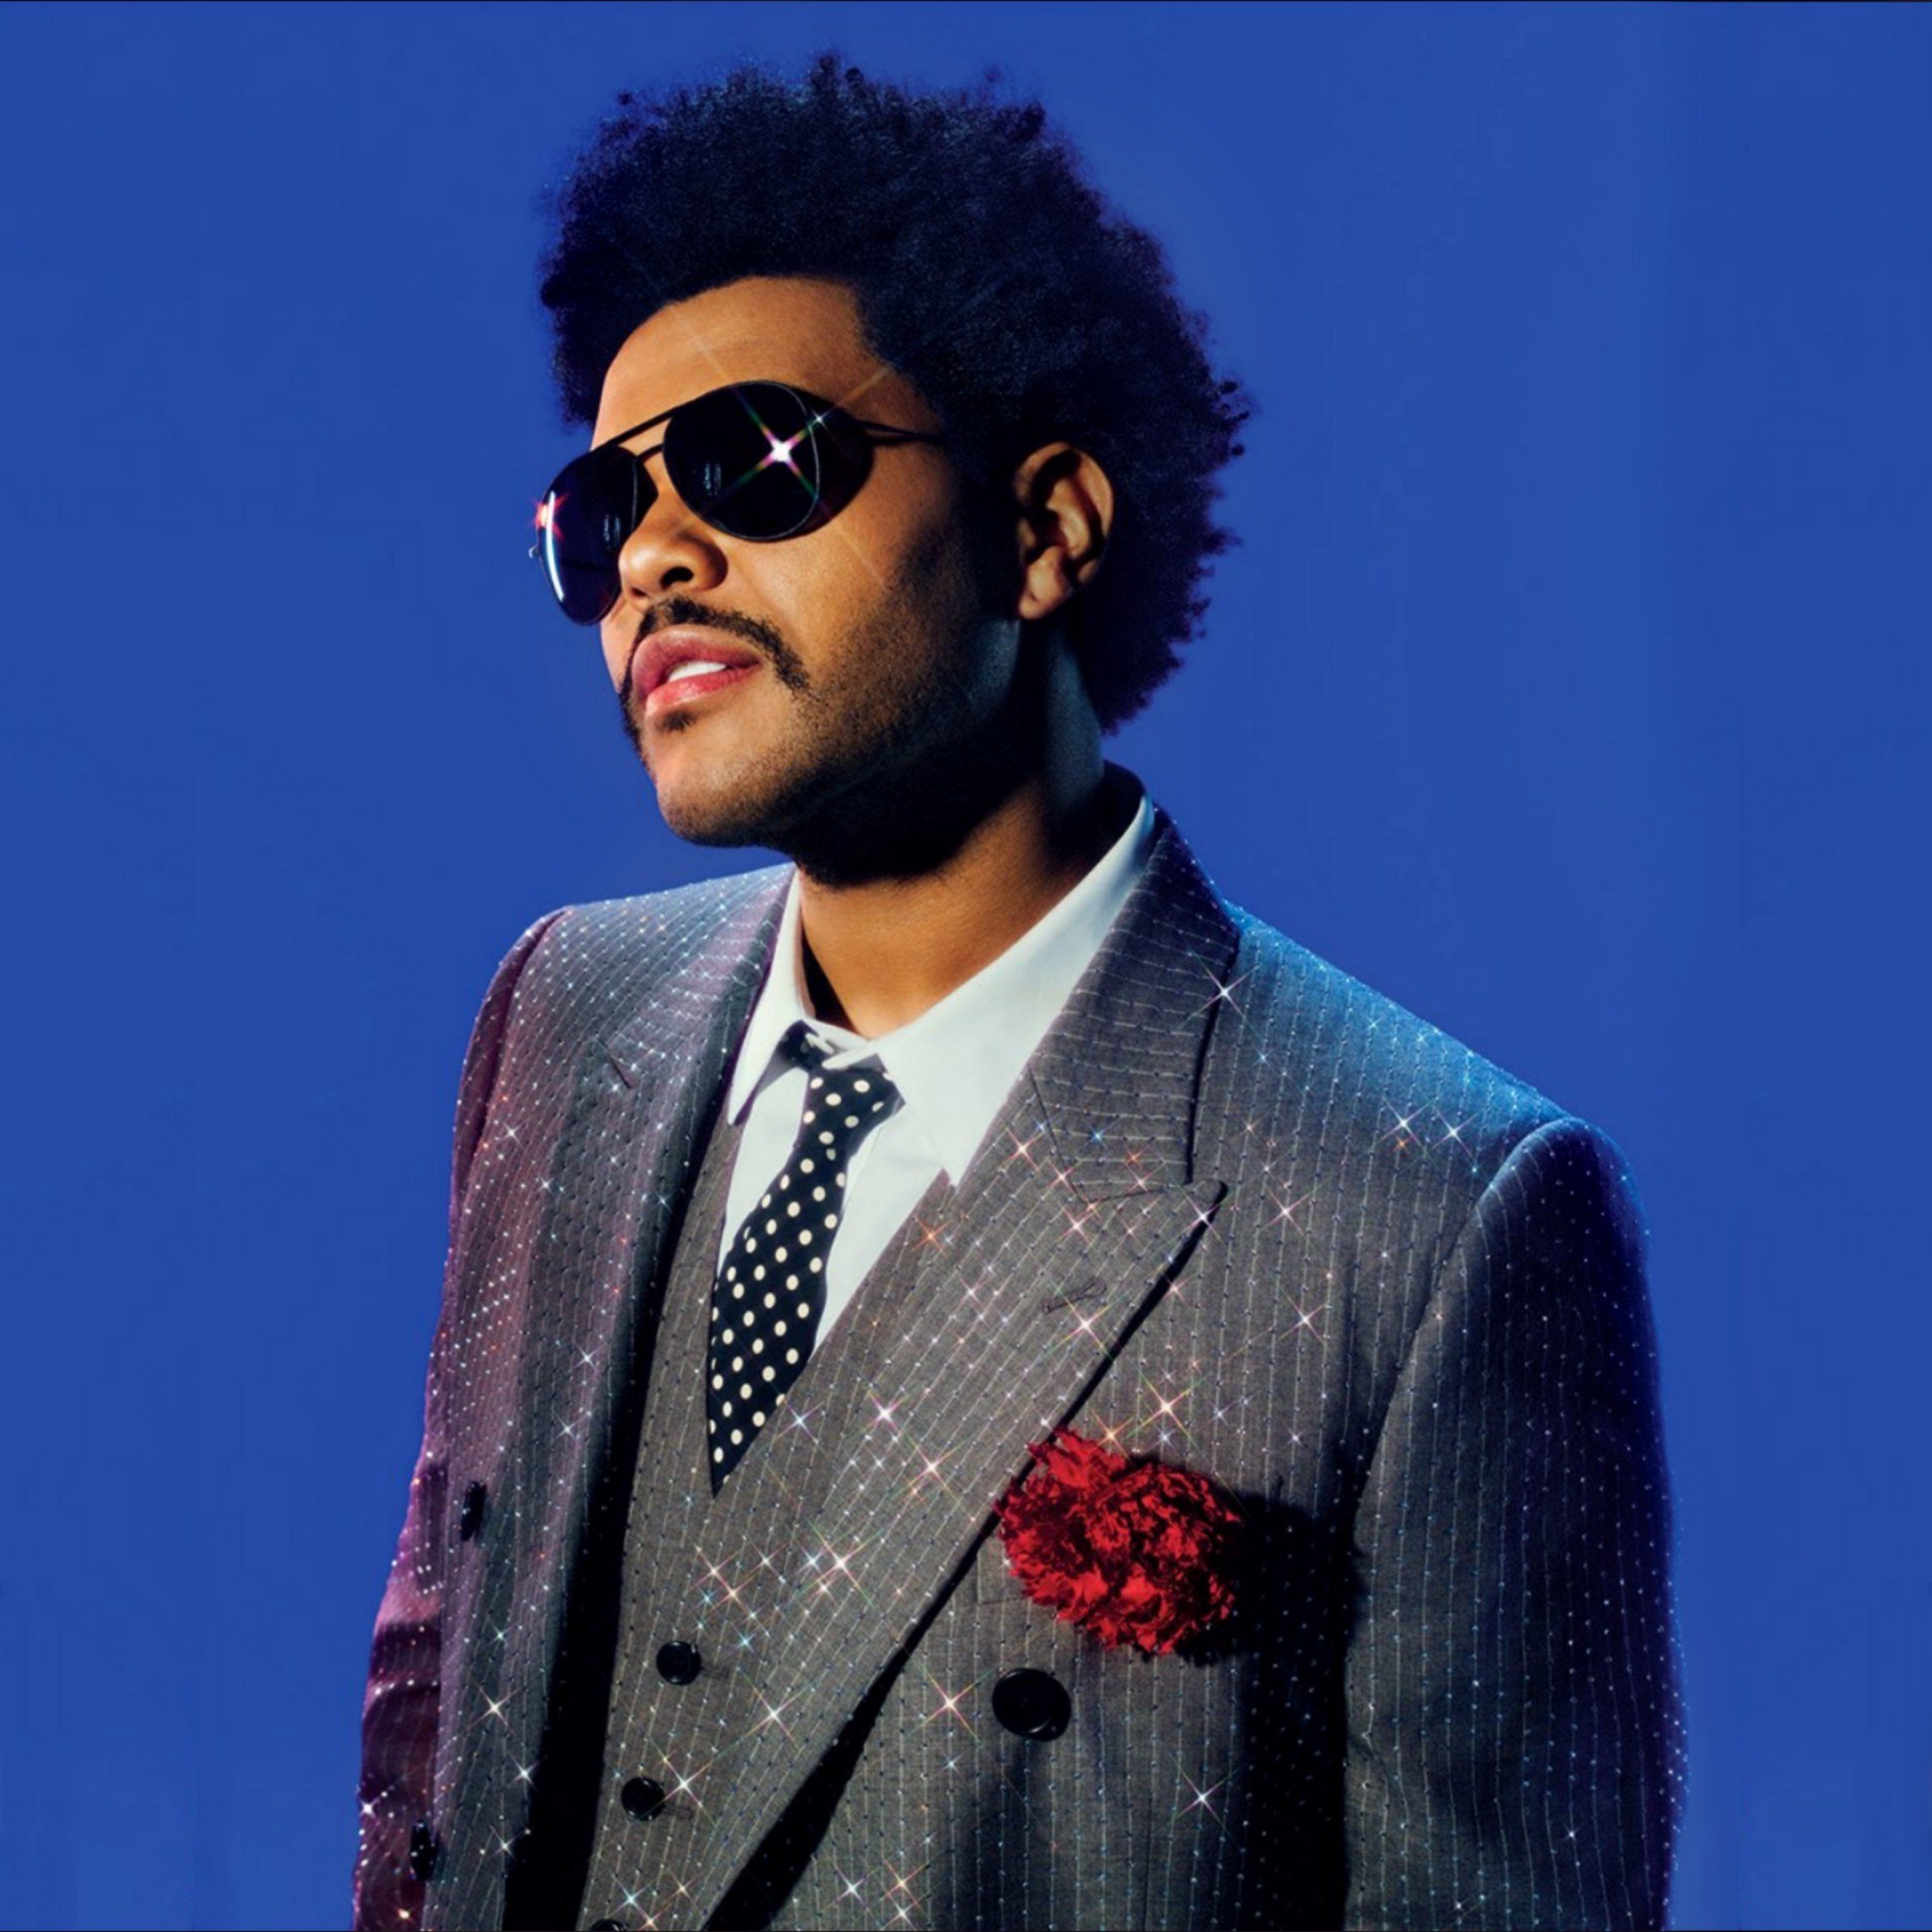 Перевод песен викенда. The Weeknd. Певец the Weeknd. The Weeknd фото. The Weeknd певец 2020.